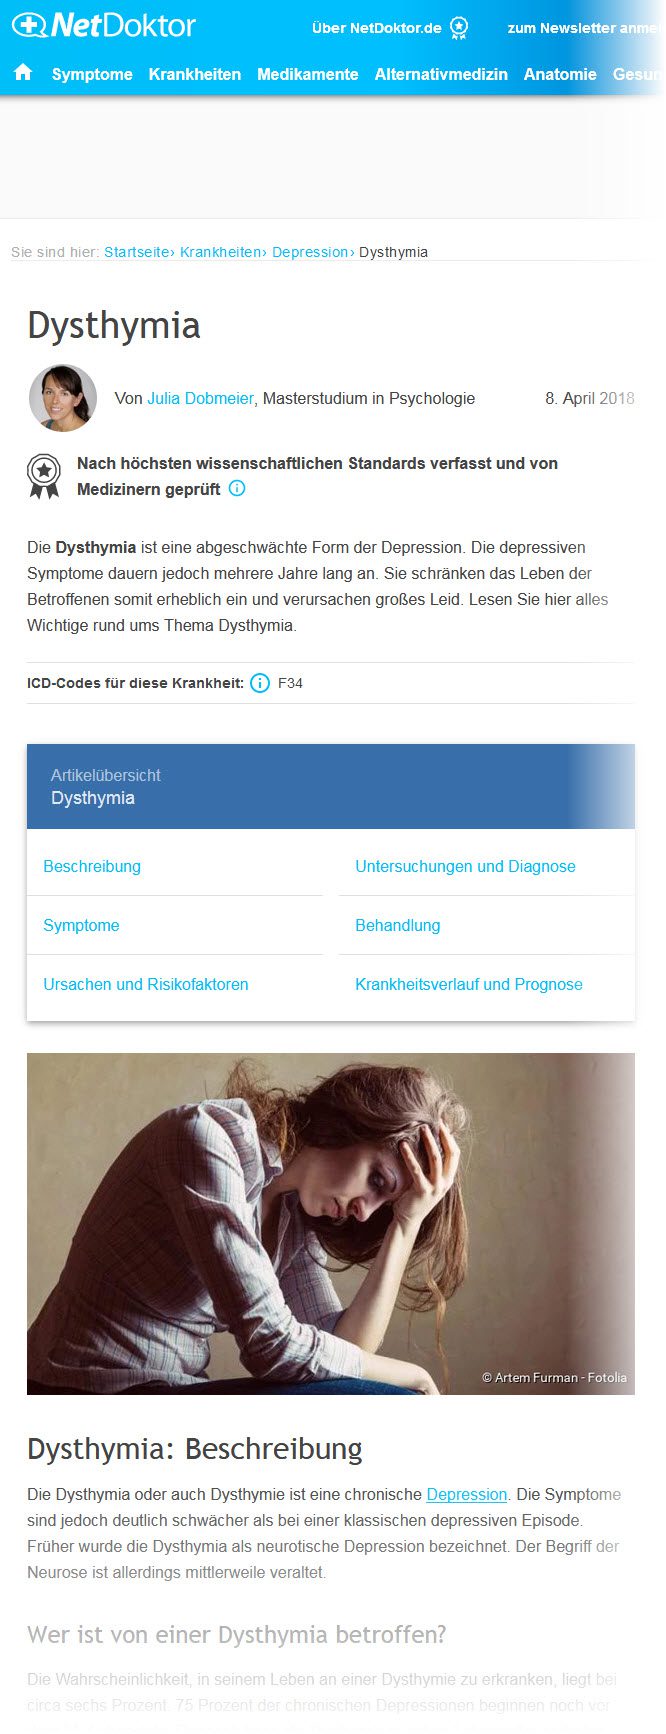 Dysthymie / Dysthymia - Symptome, Diagnose, Ursachen, Behandlung (Screenshot netdoktor.de am 22.08.2019)